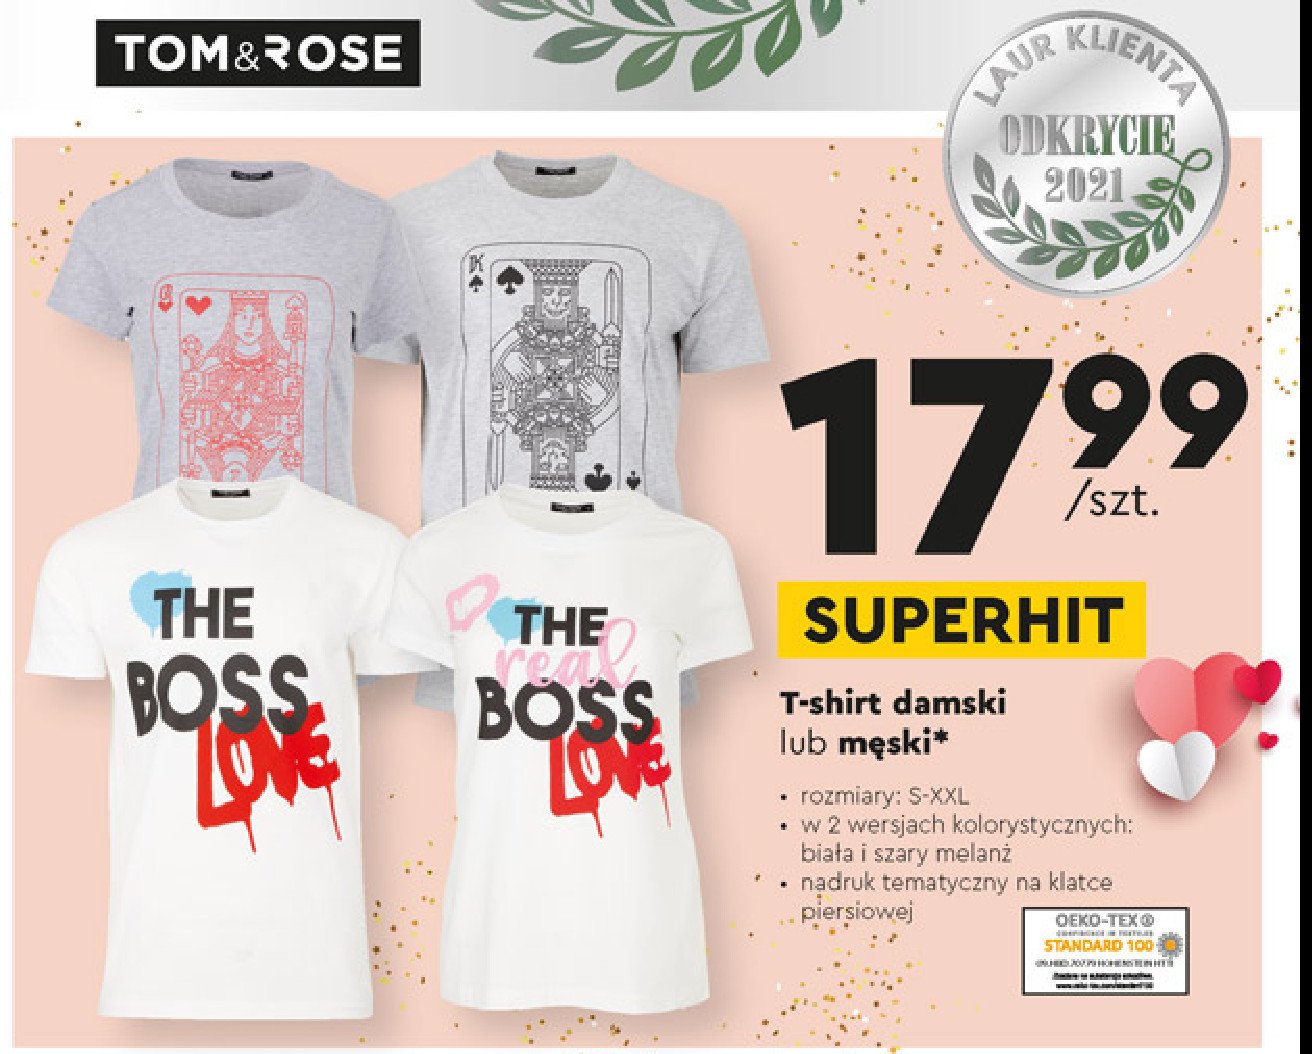 T-shirt damski s-xxl Tom & rose promocja